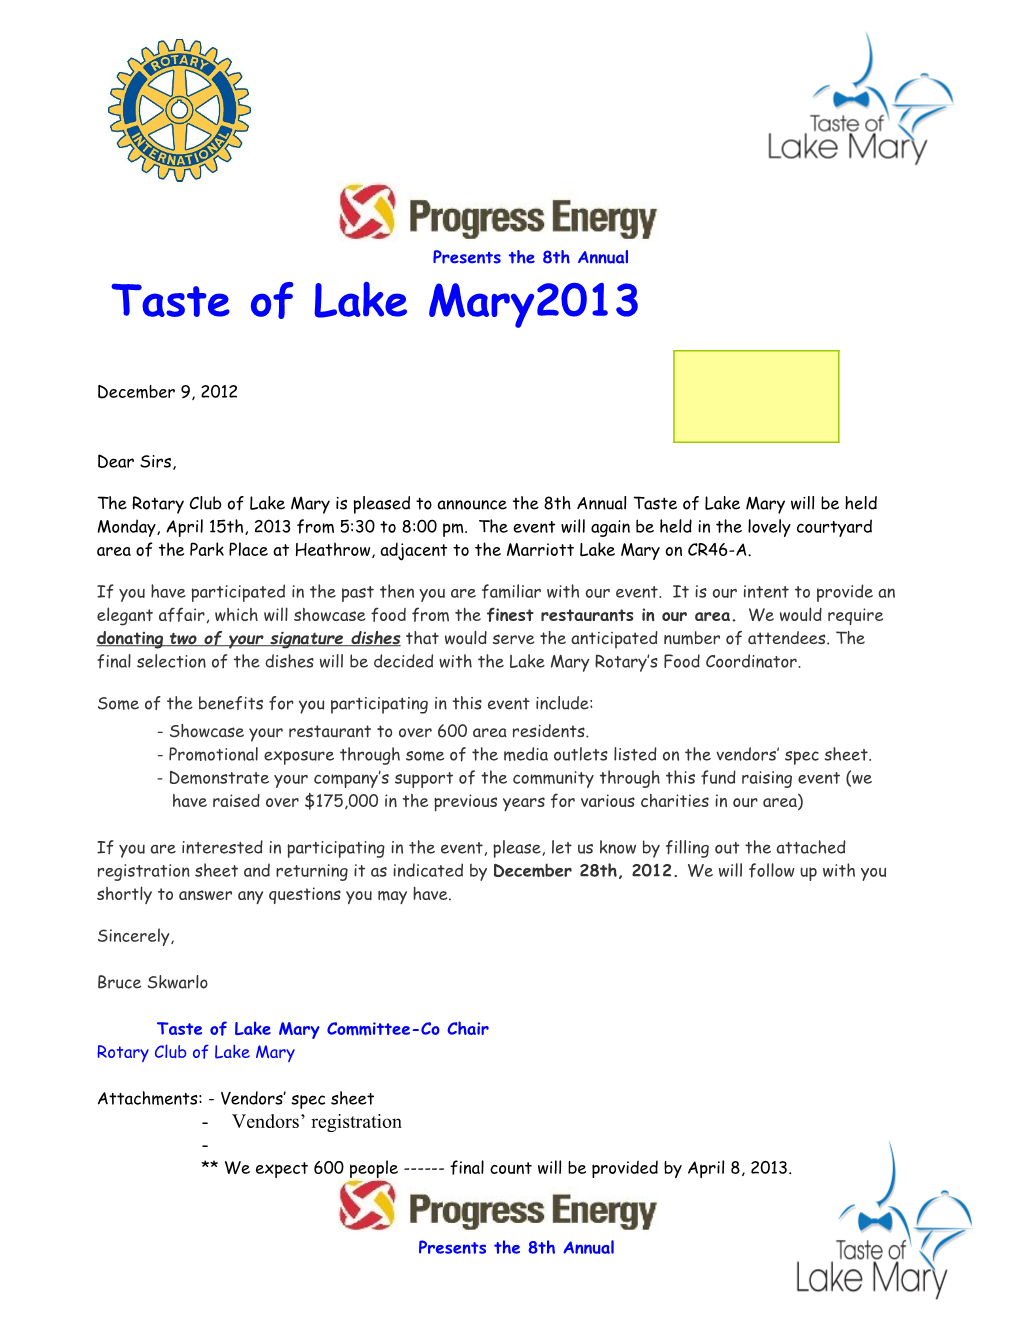 Rotary Club of Lake Mary